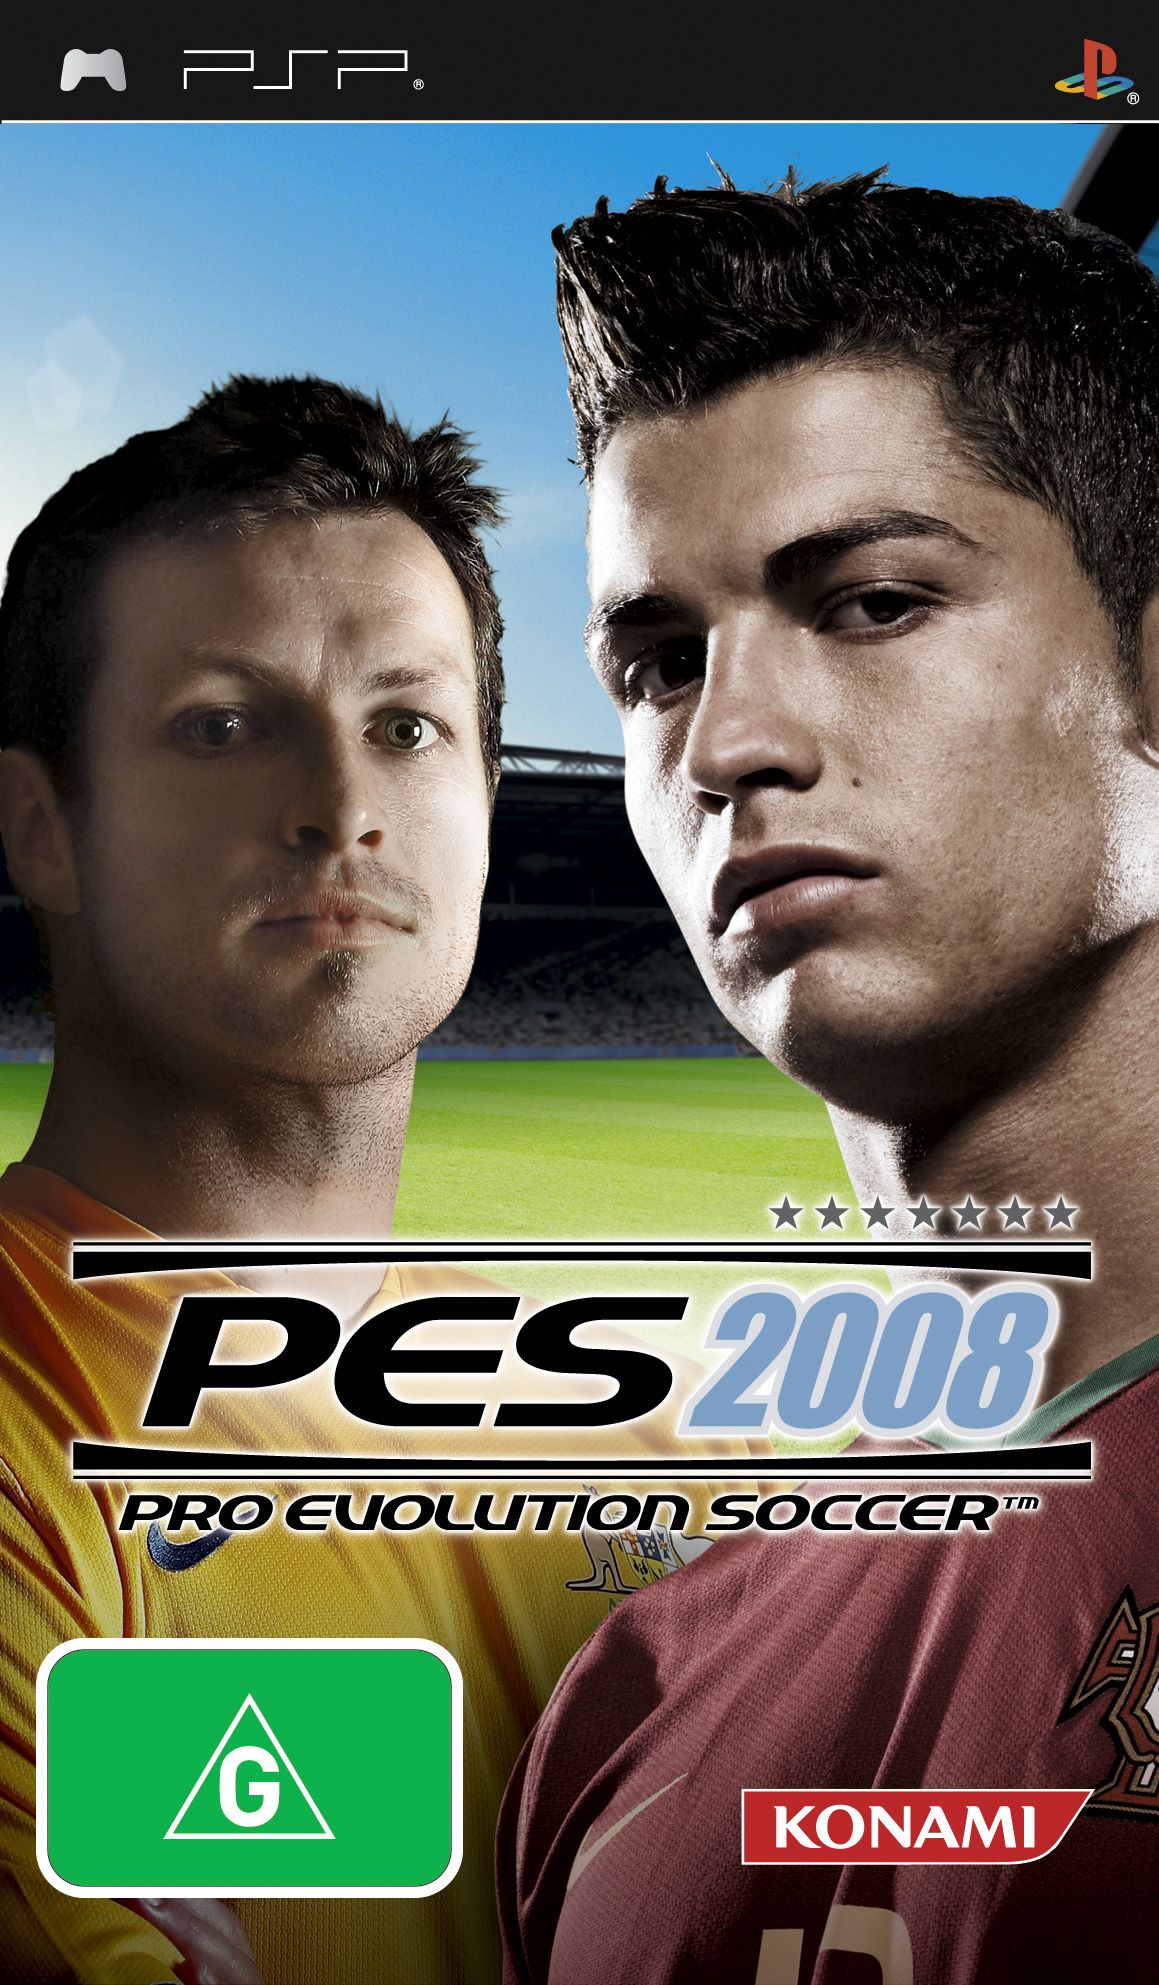 Pro Evolution Soccer 2008 PSP (Brand New Factory Sealed US Version) Sony  PSP